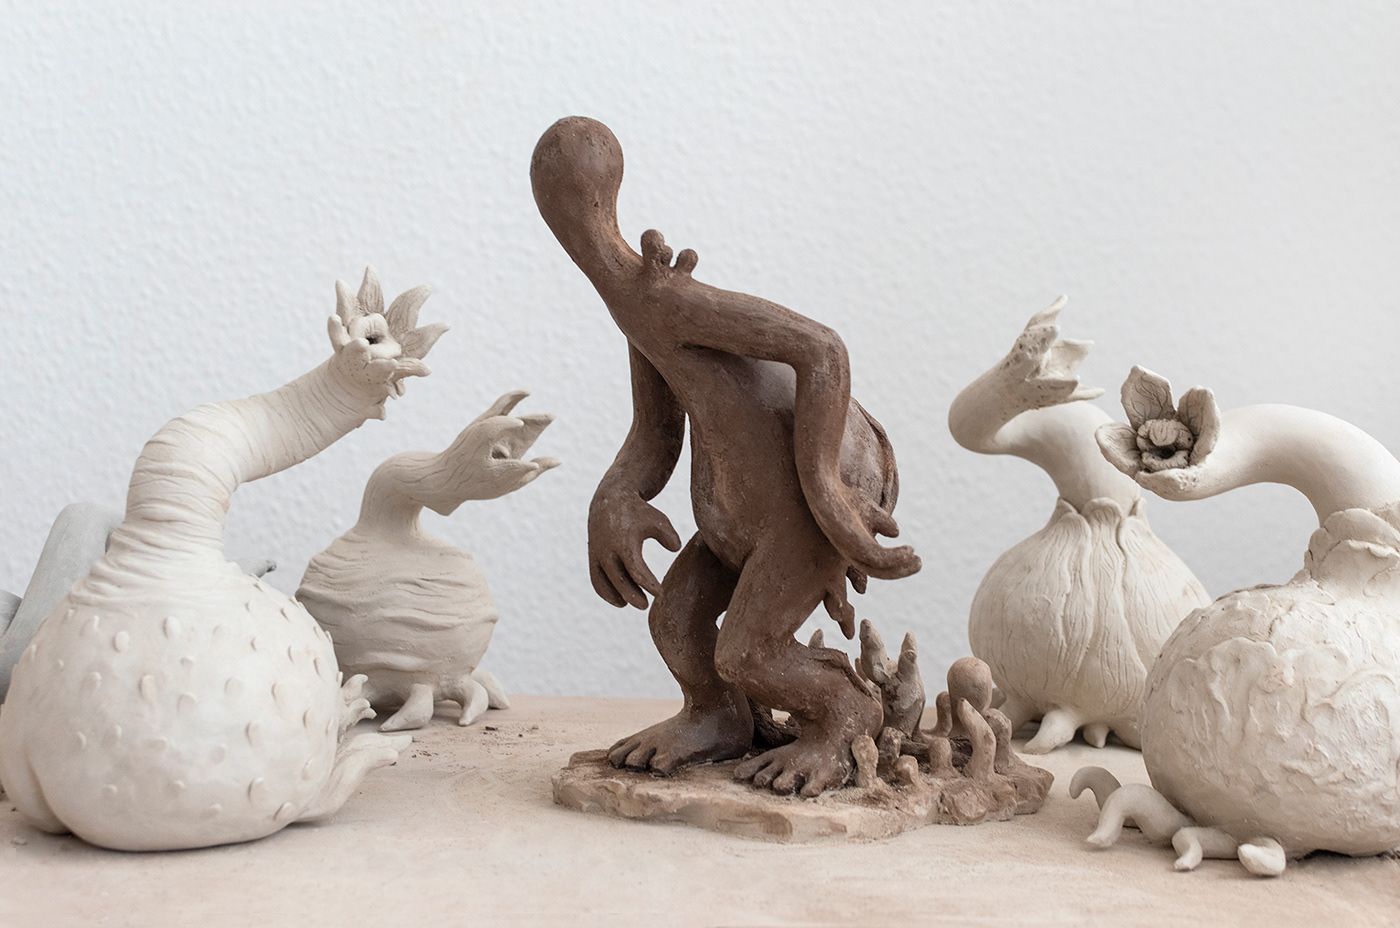 sculpture ceramics  clay handmade conceptual art contemporary bizarre world crazy plant Fantasy world humanoid creature